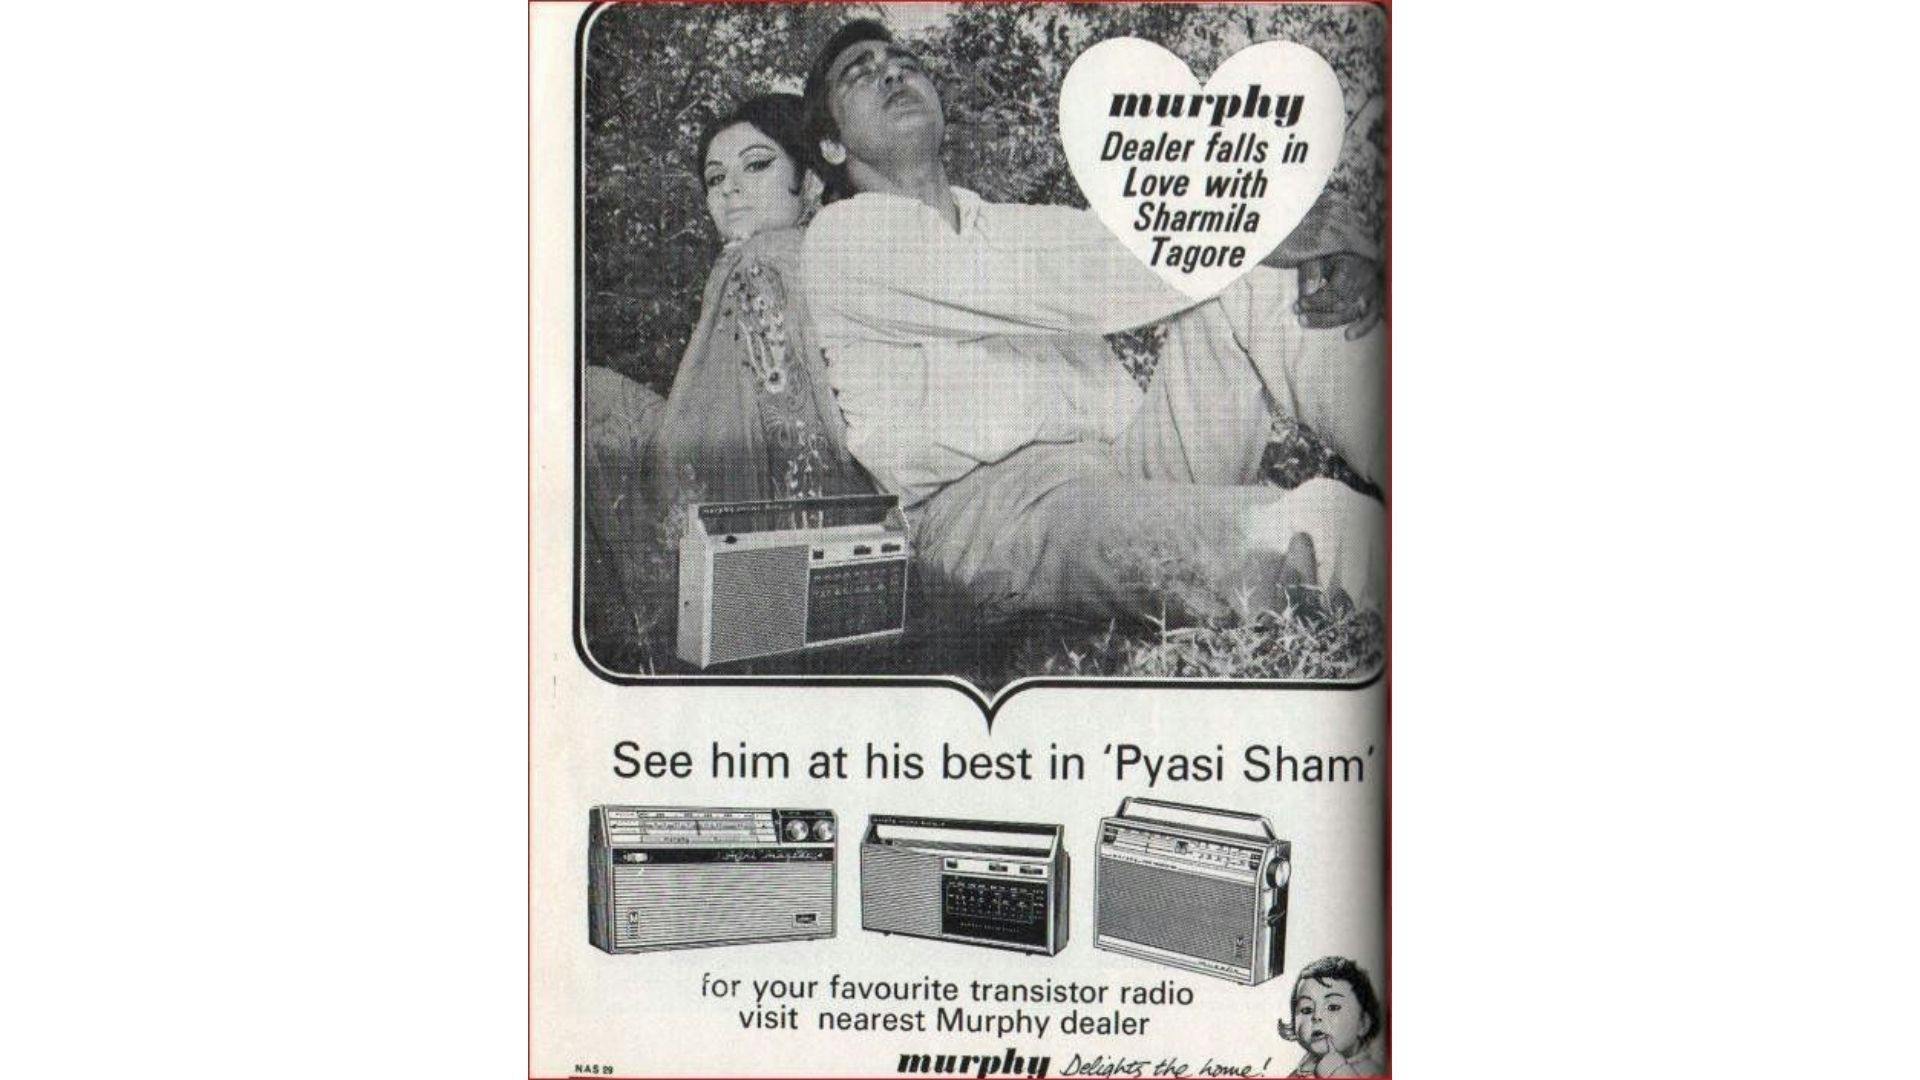 Murphy Transistor Radio